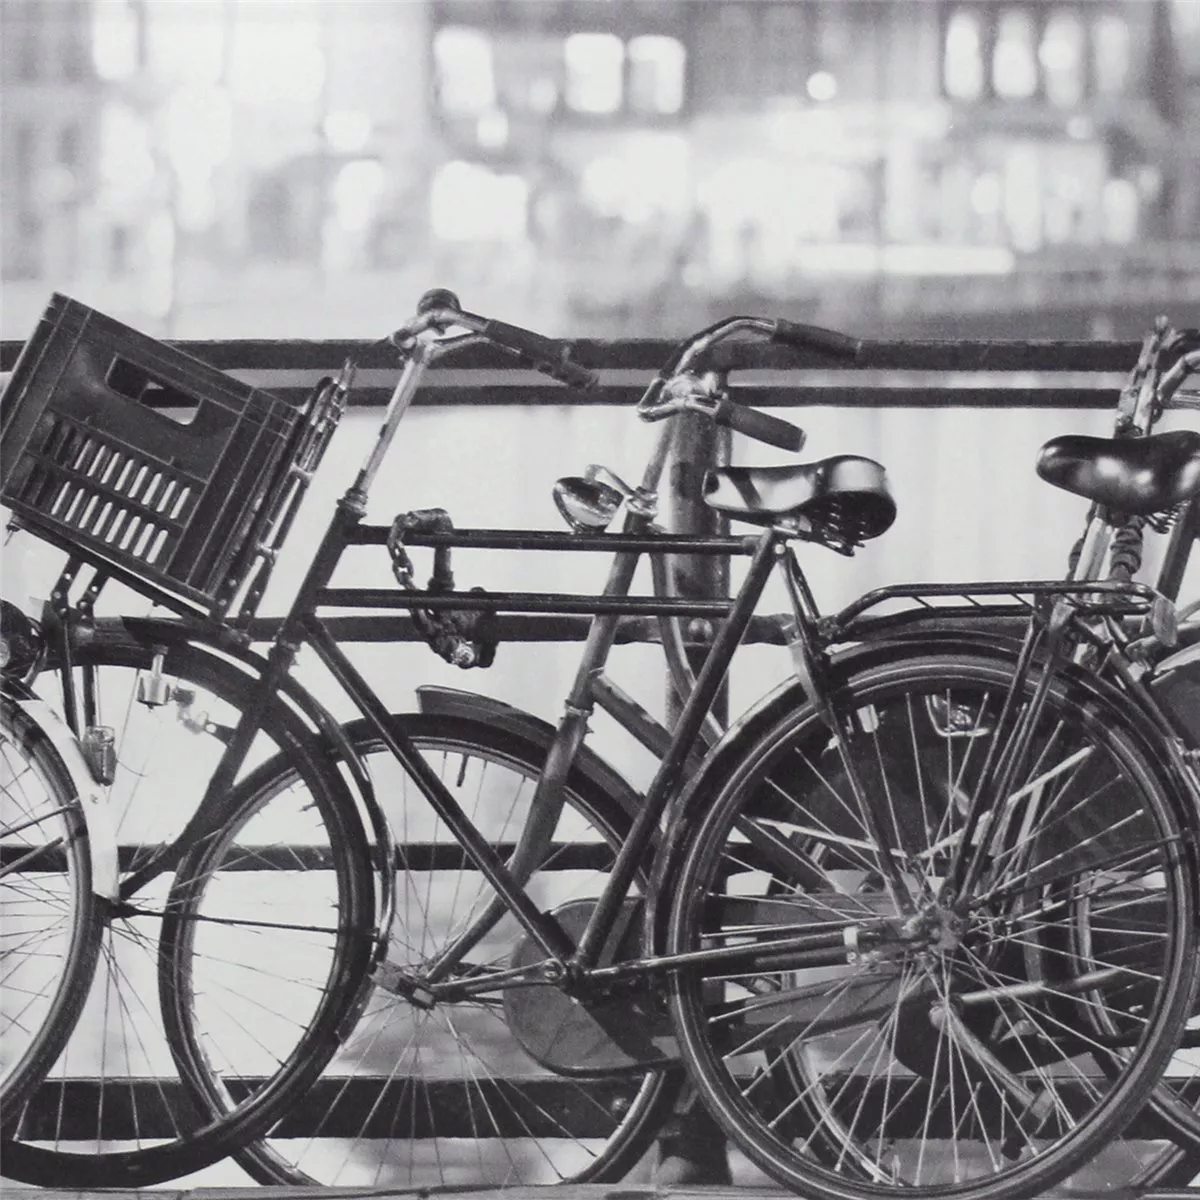 Amsterdam Decor Glass Effect Tiles Fahrrad 20x50cm